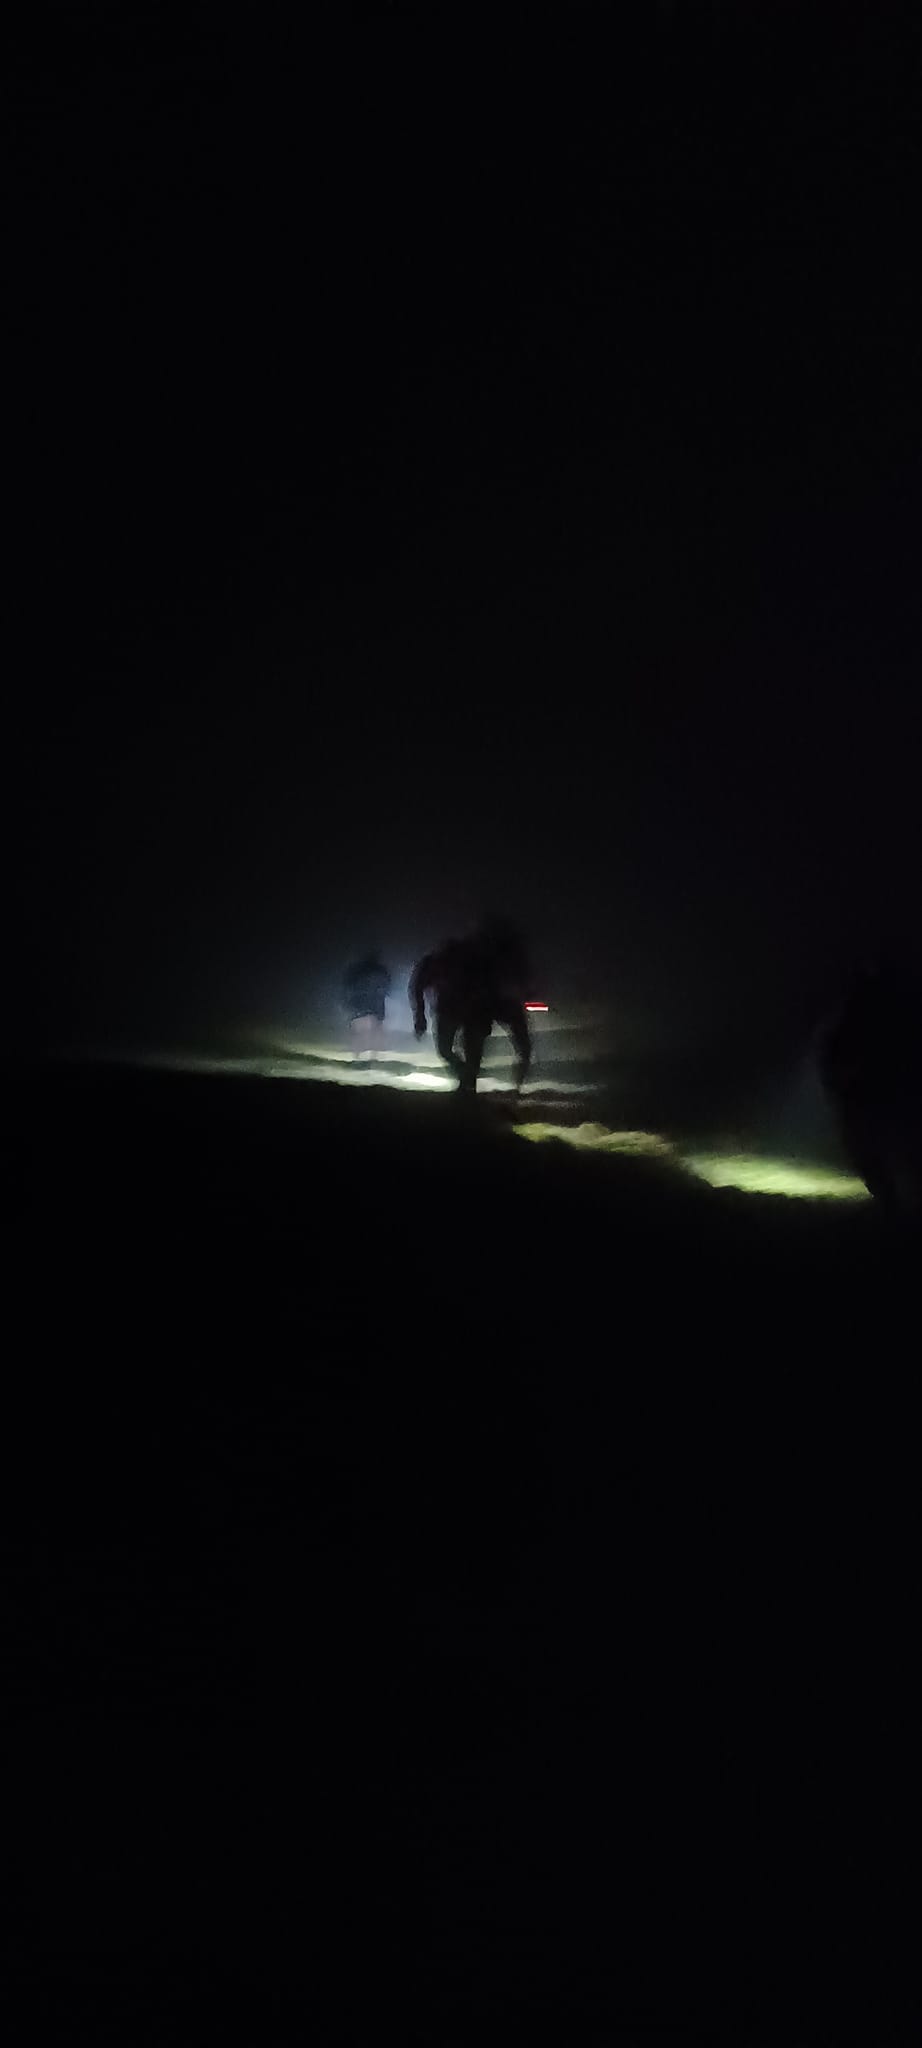 Knock hill in the dark